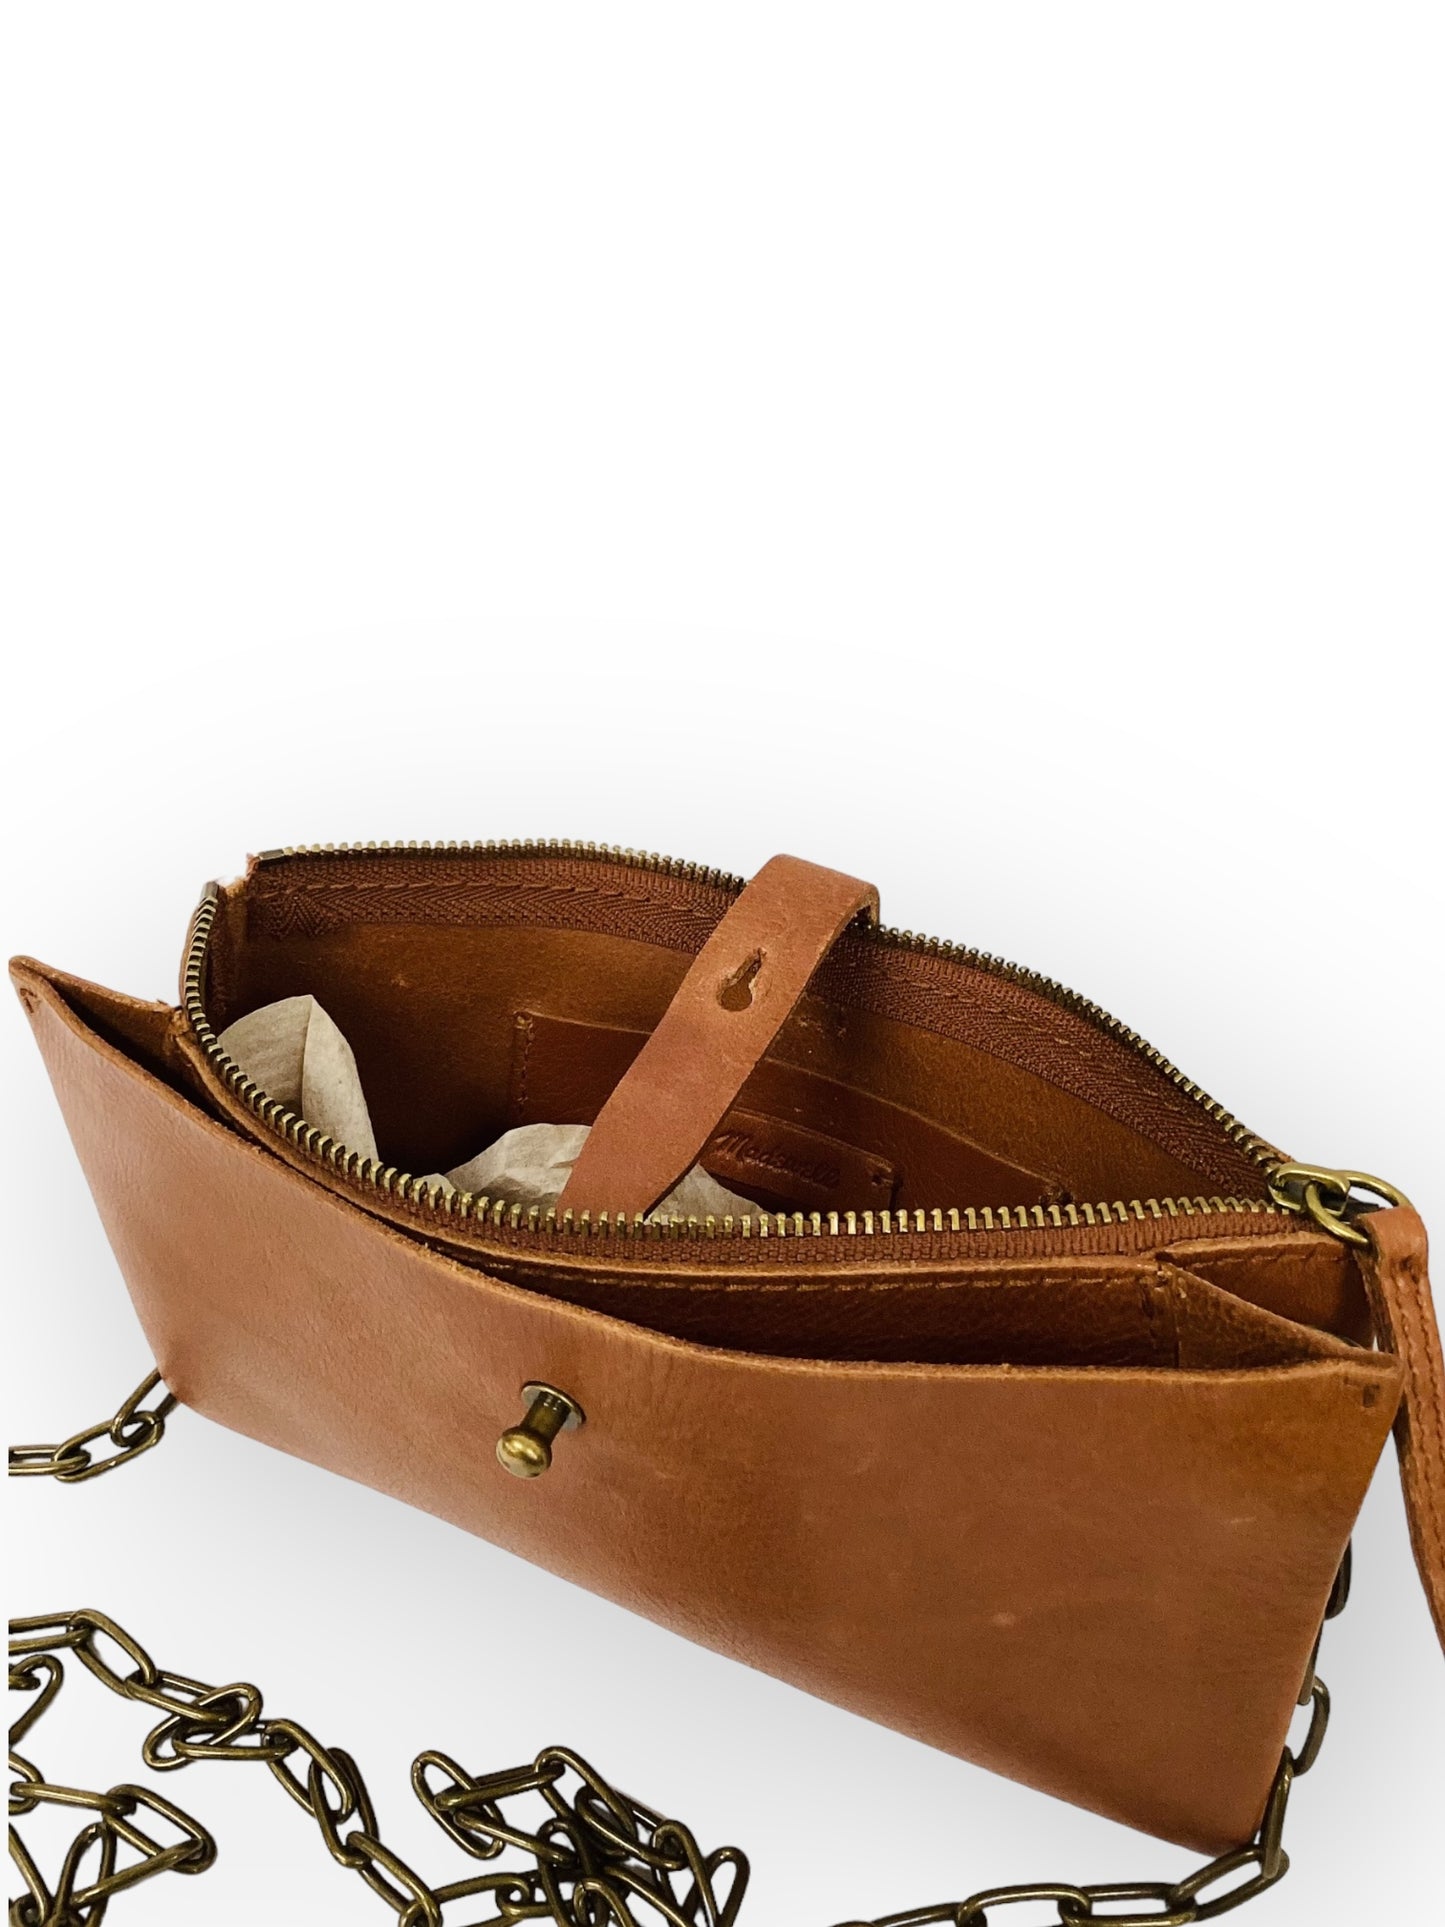 Handbag By Madewell  Size: Small